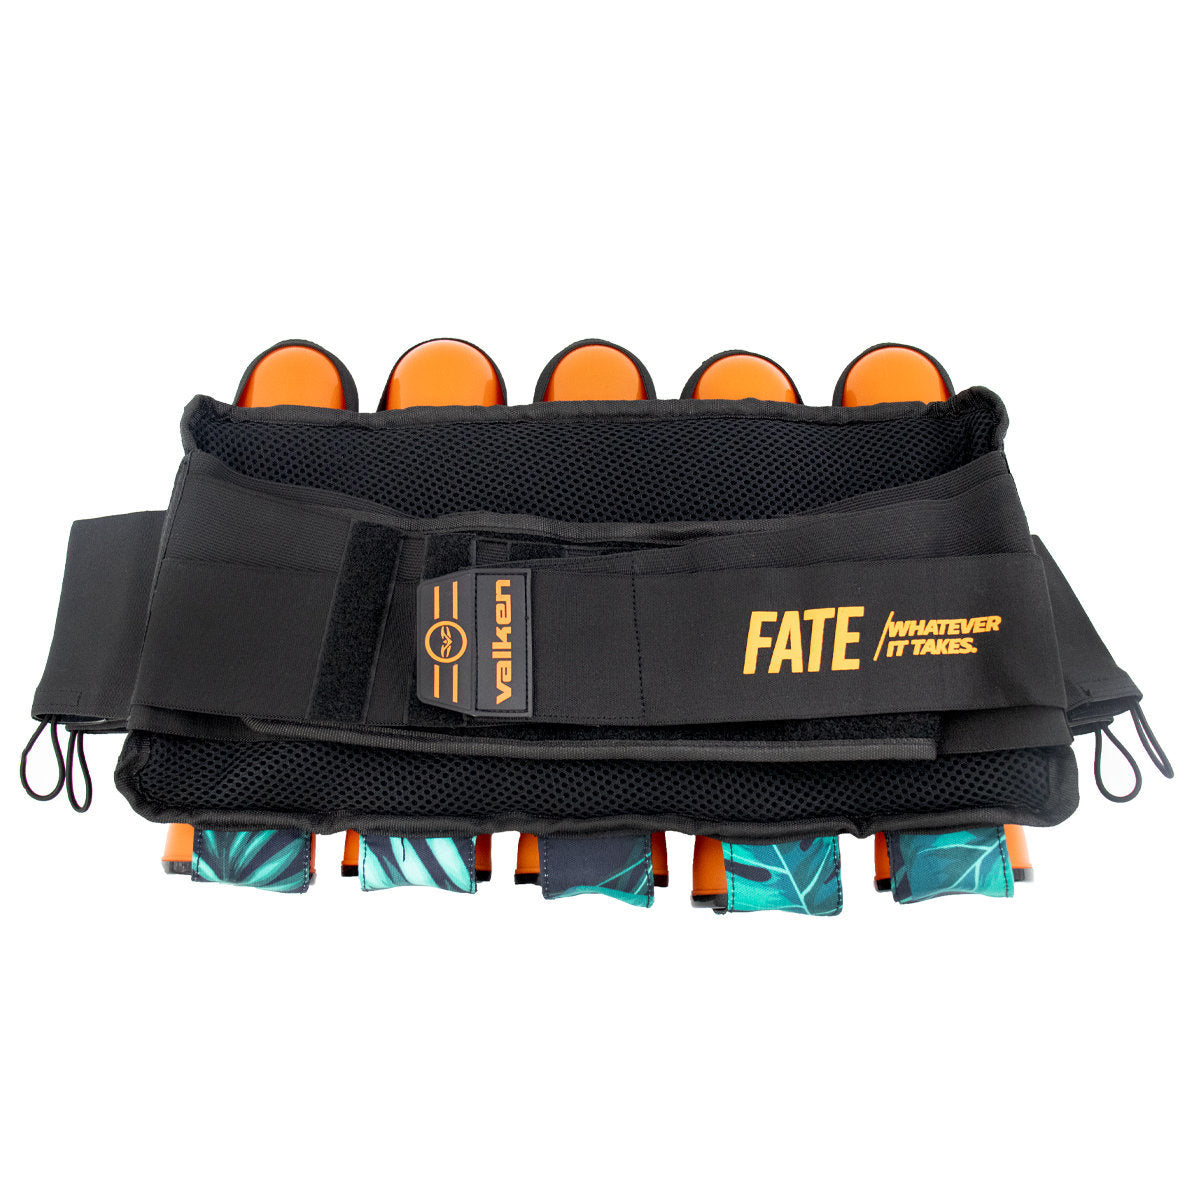 Valken Fate Gfx 5+8 Paintball Harness - Hawaiian Orange | Paintball Pod Harness